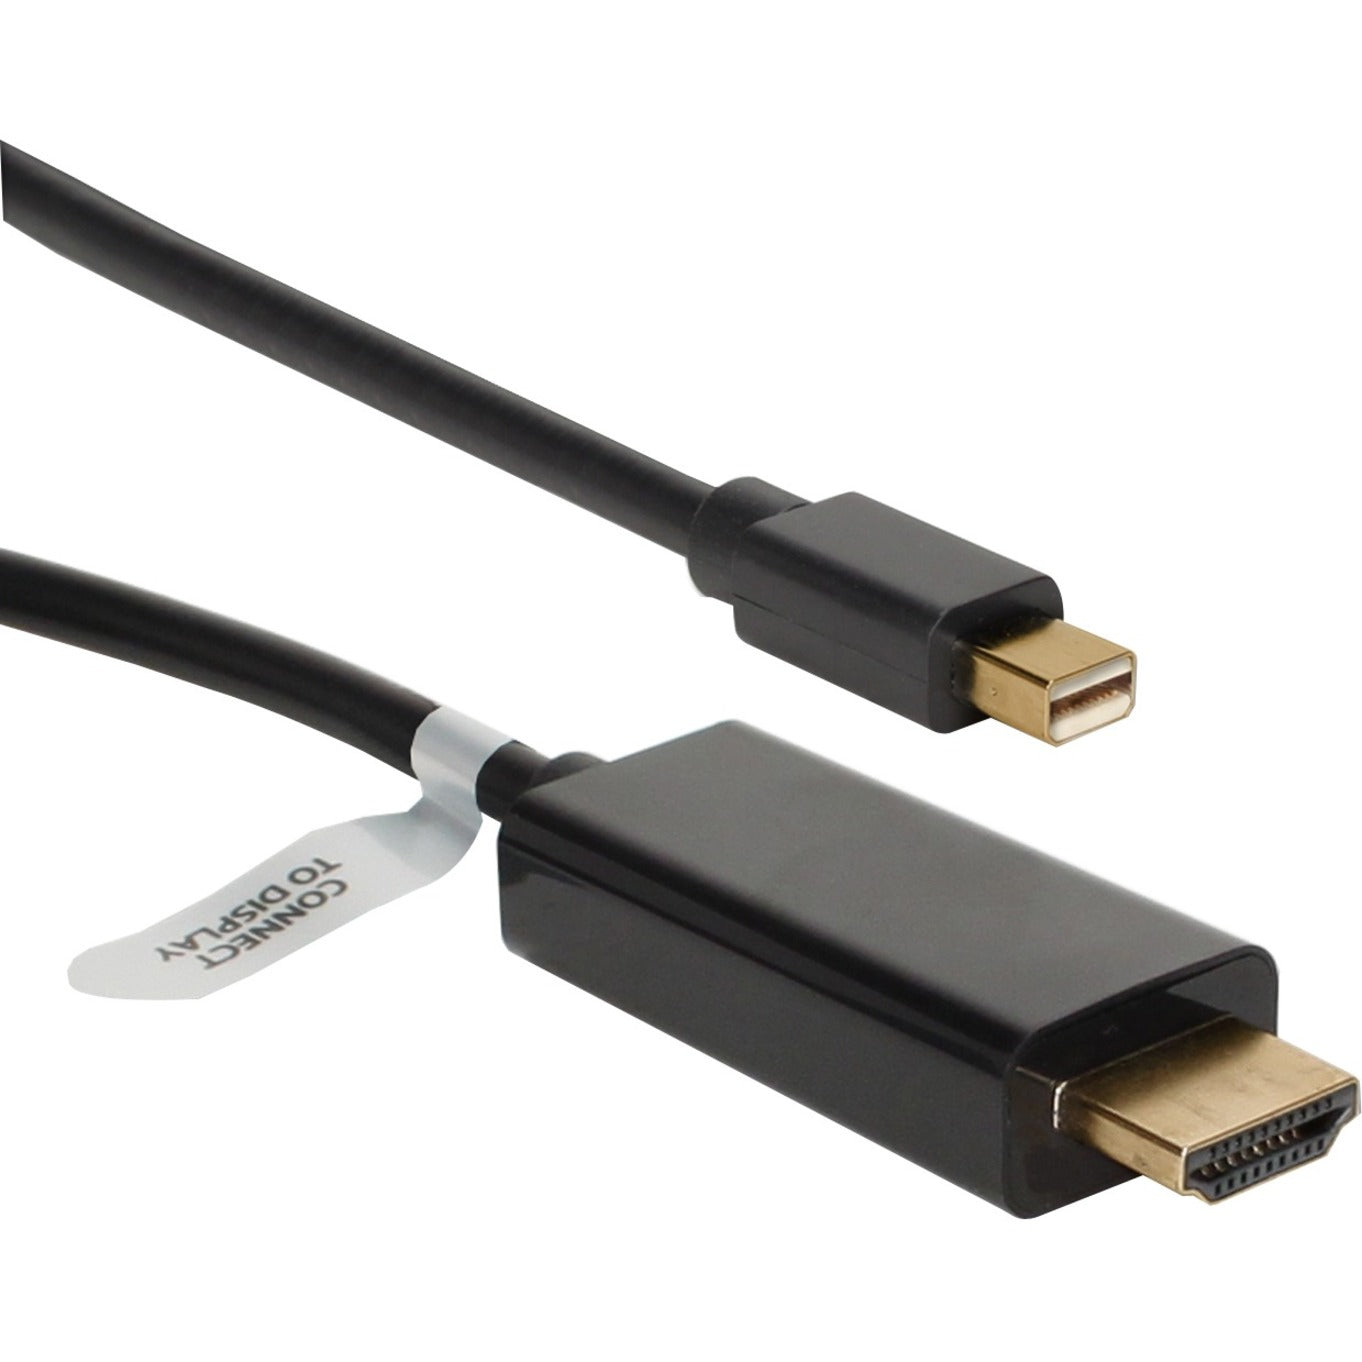 QVS MDPH-10BK 10ft Mini DisplayPort/Thunderbolt to HDMI Cable, Digital Video Black